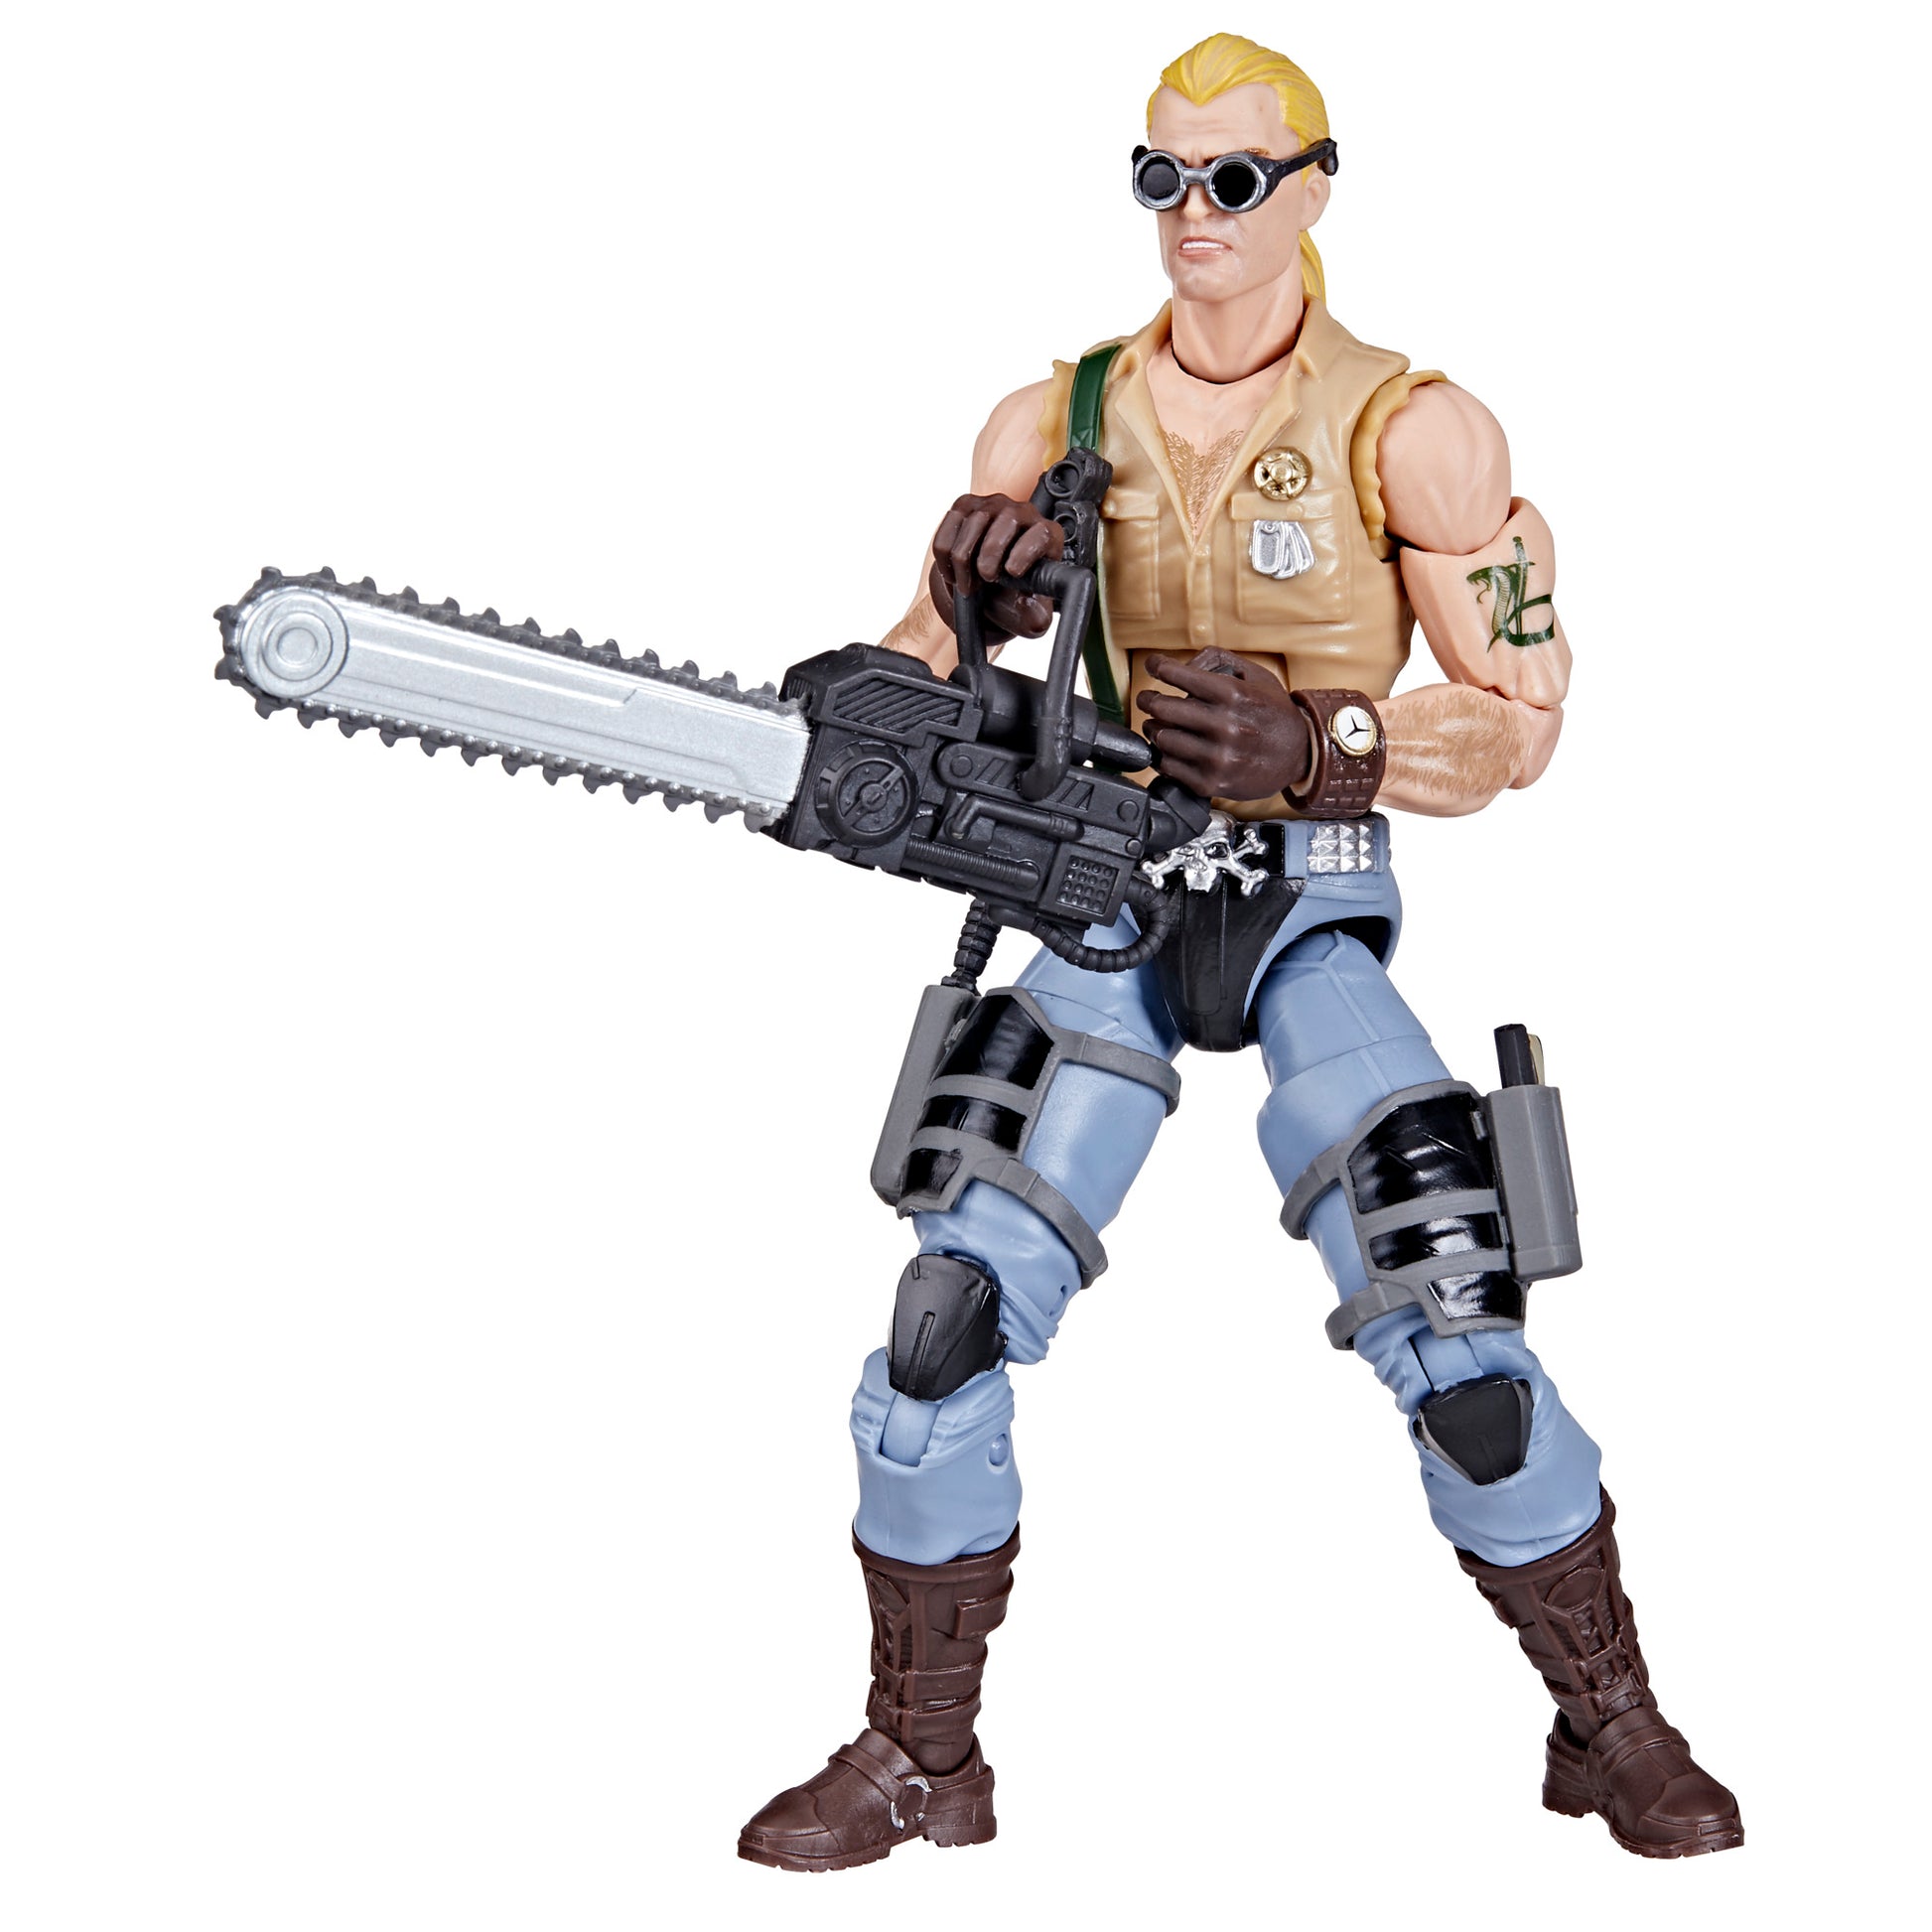  G.I. Joe Classified Series Dreadnok Buzzer, Collectible G.I. Joe Action Figure (6"), 106 HERETOSERVEYOU 2